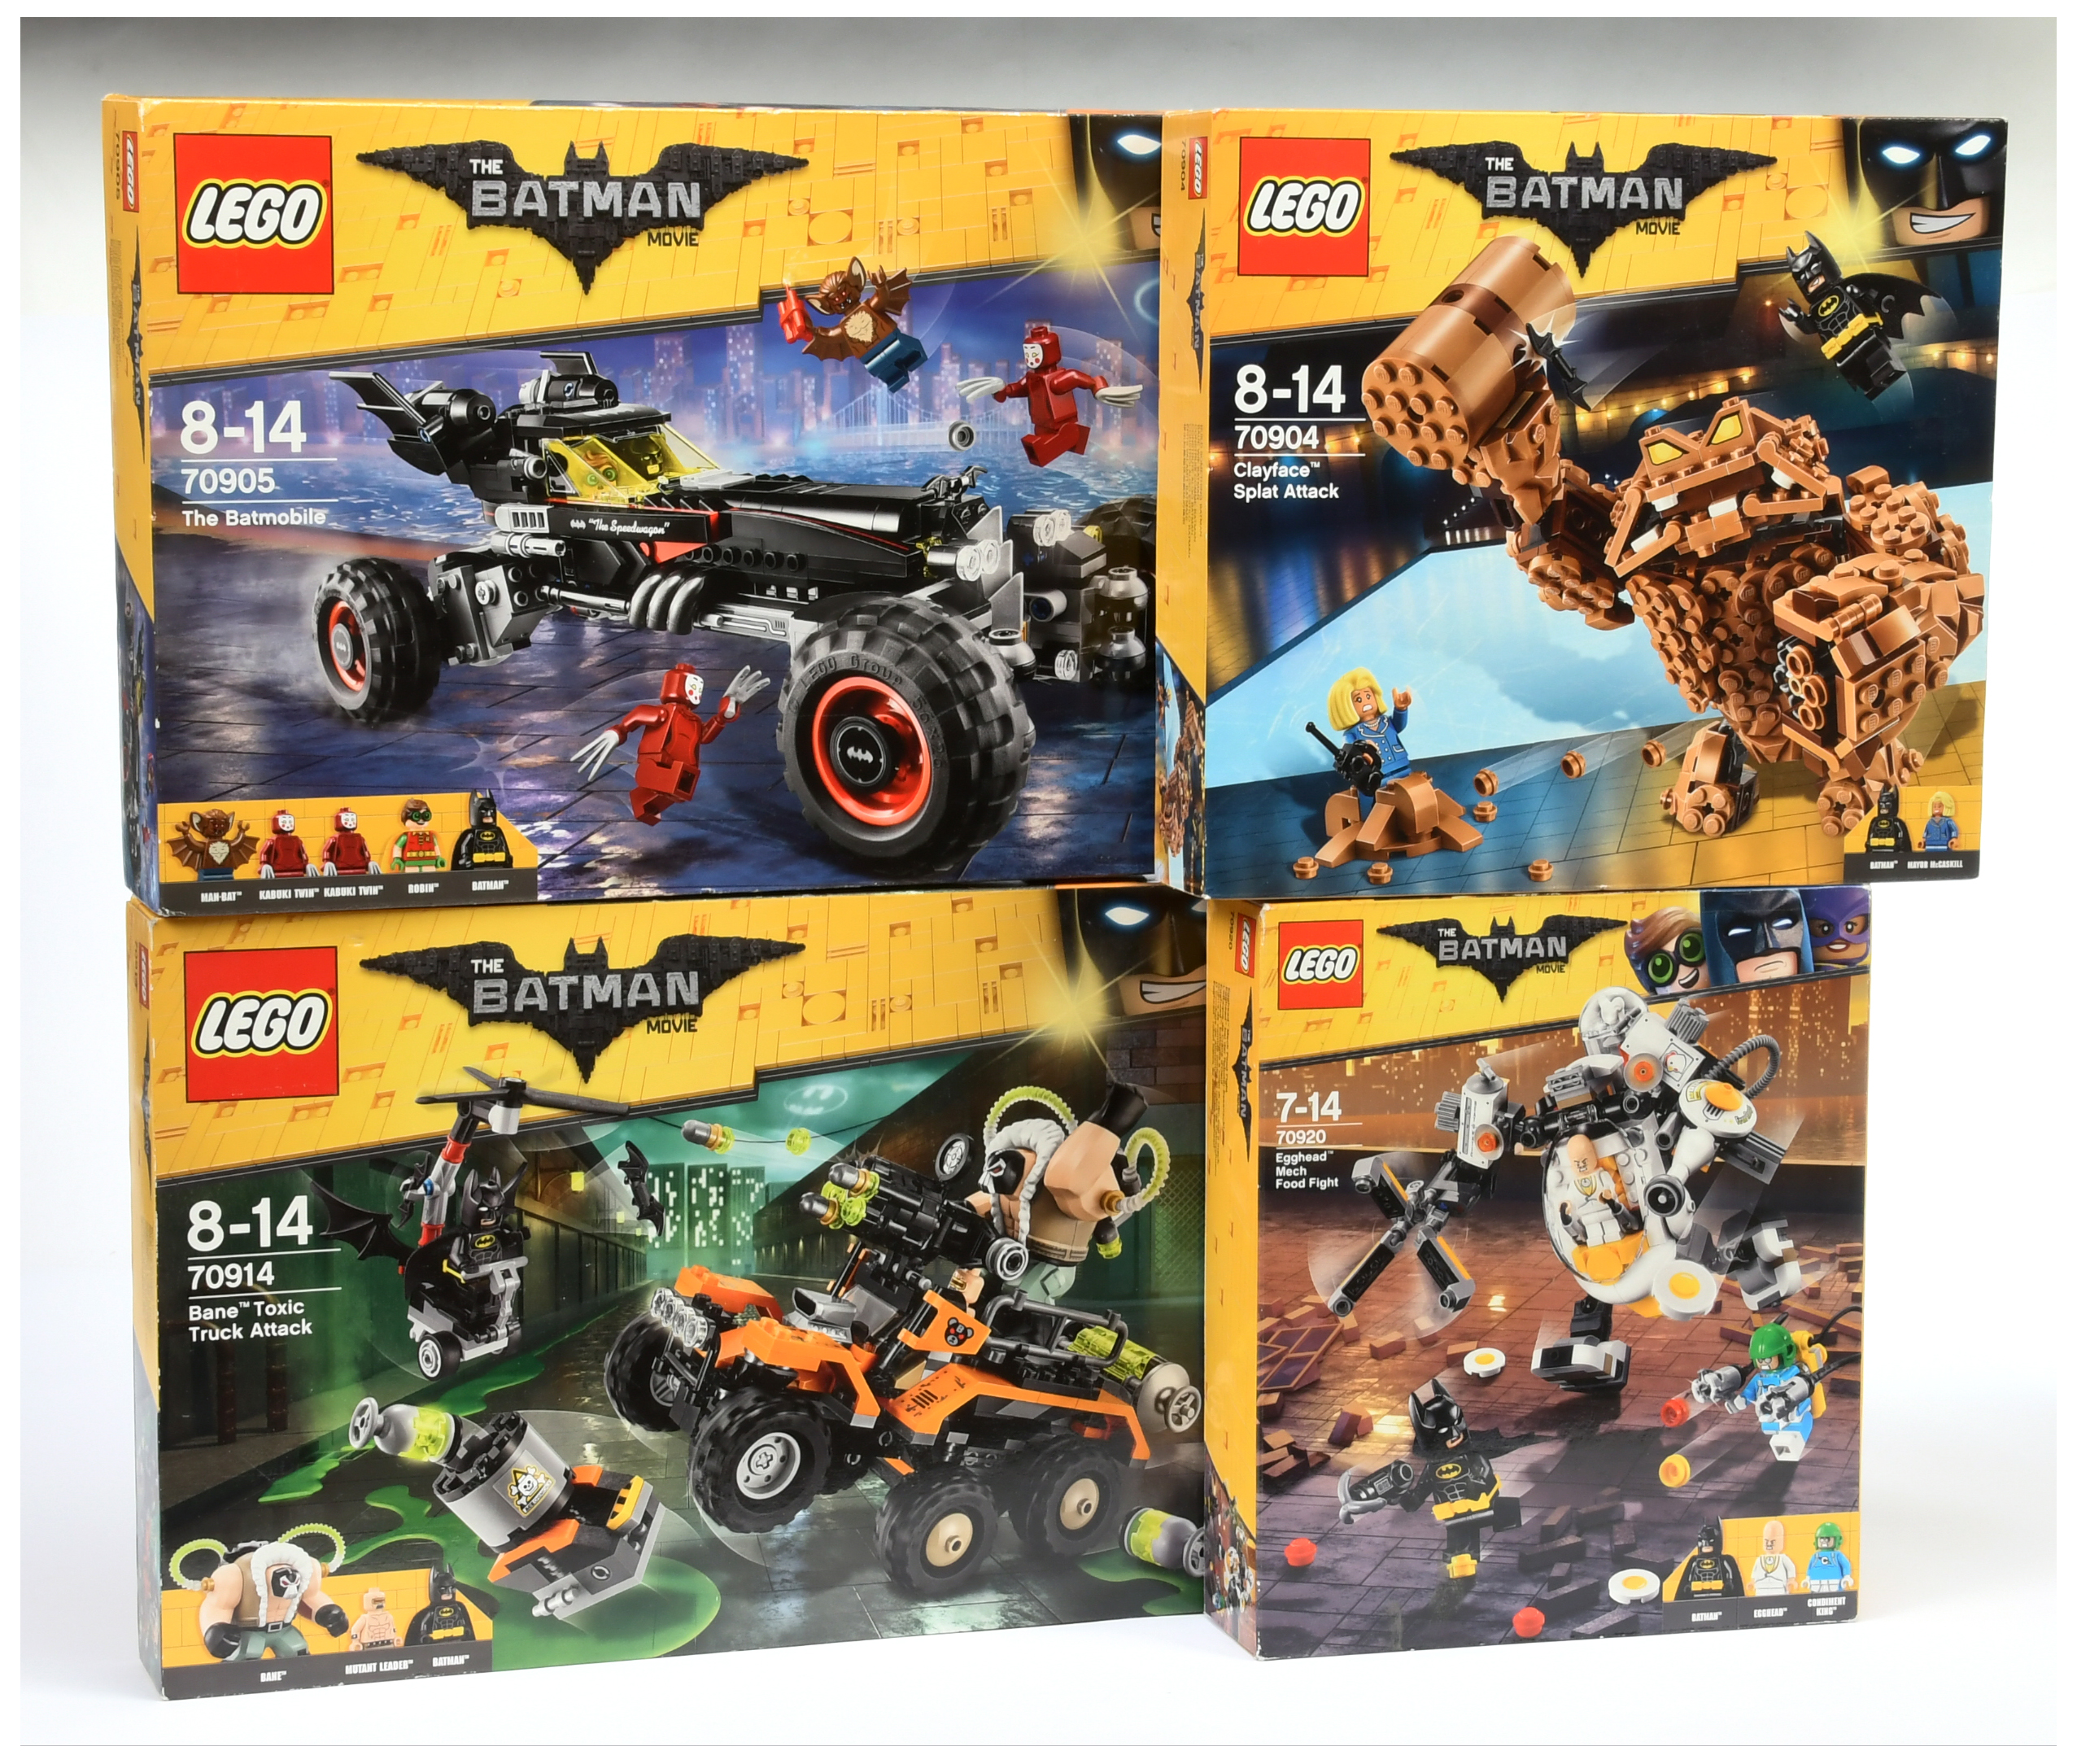 Lego The Batman Movie group (1) 70905 The Batmobile (2) 7914 Bane Toxic Attack (3) 70904 Clayface...